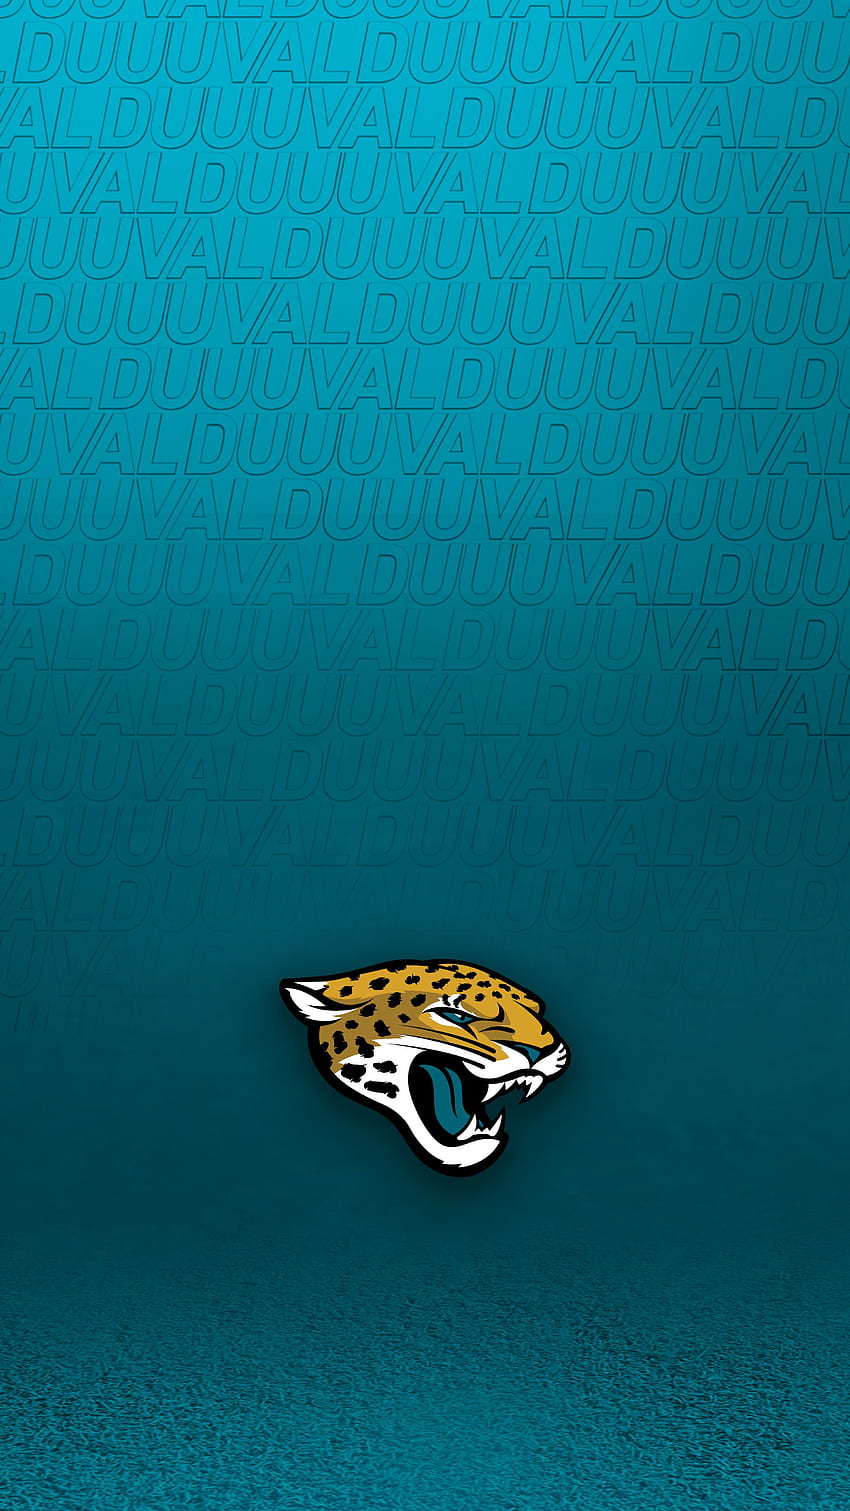 Jacksonville Jaguars, Official Site of the Jacksonville Jaguars, Blue and Teal HD phone wallpaper